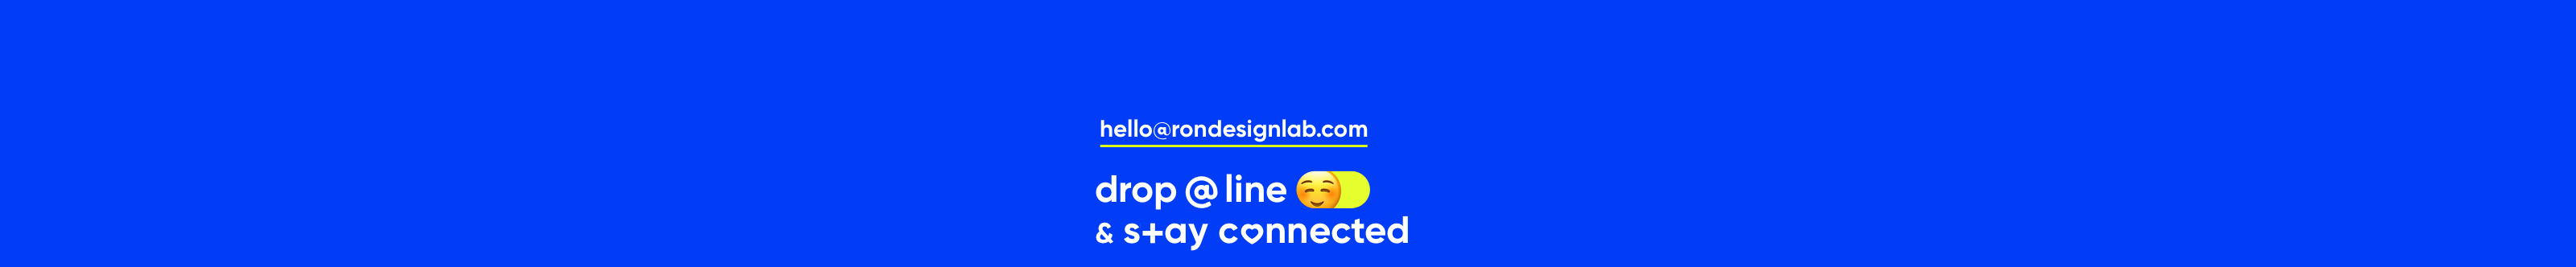 Rondesignlab ⭐️'s profile banner